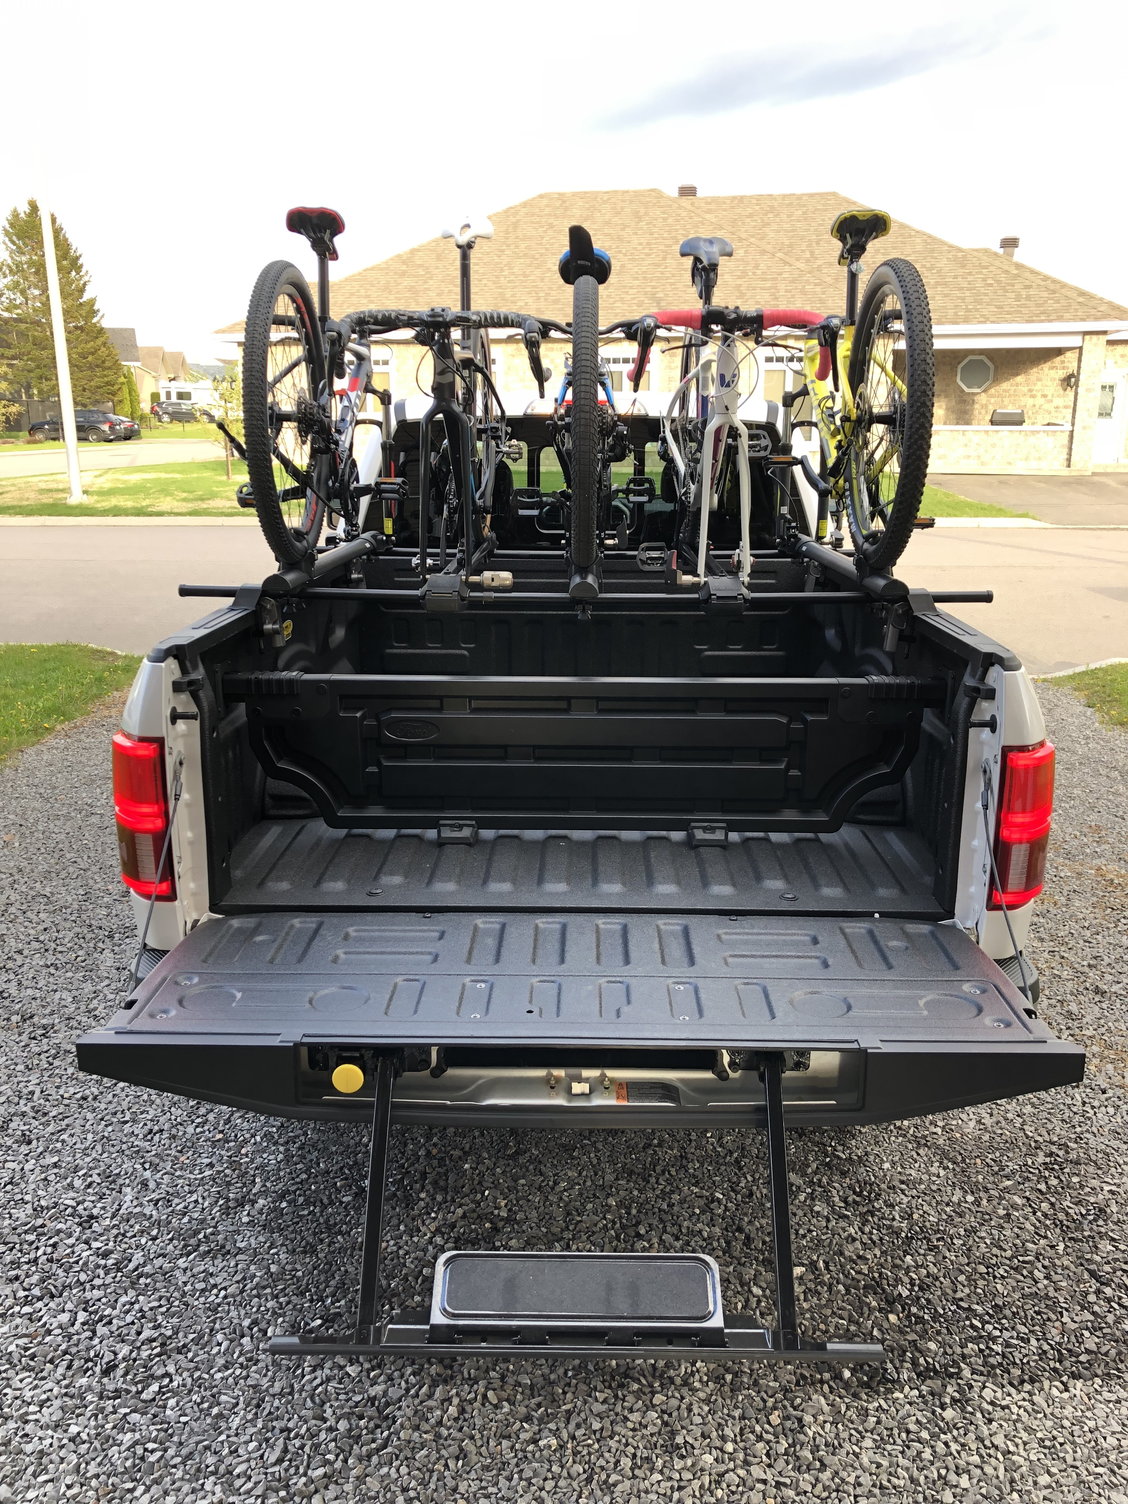 5 bike rack for truck bed